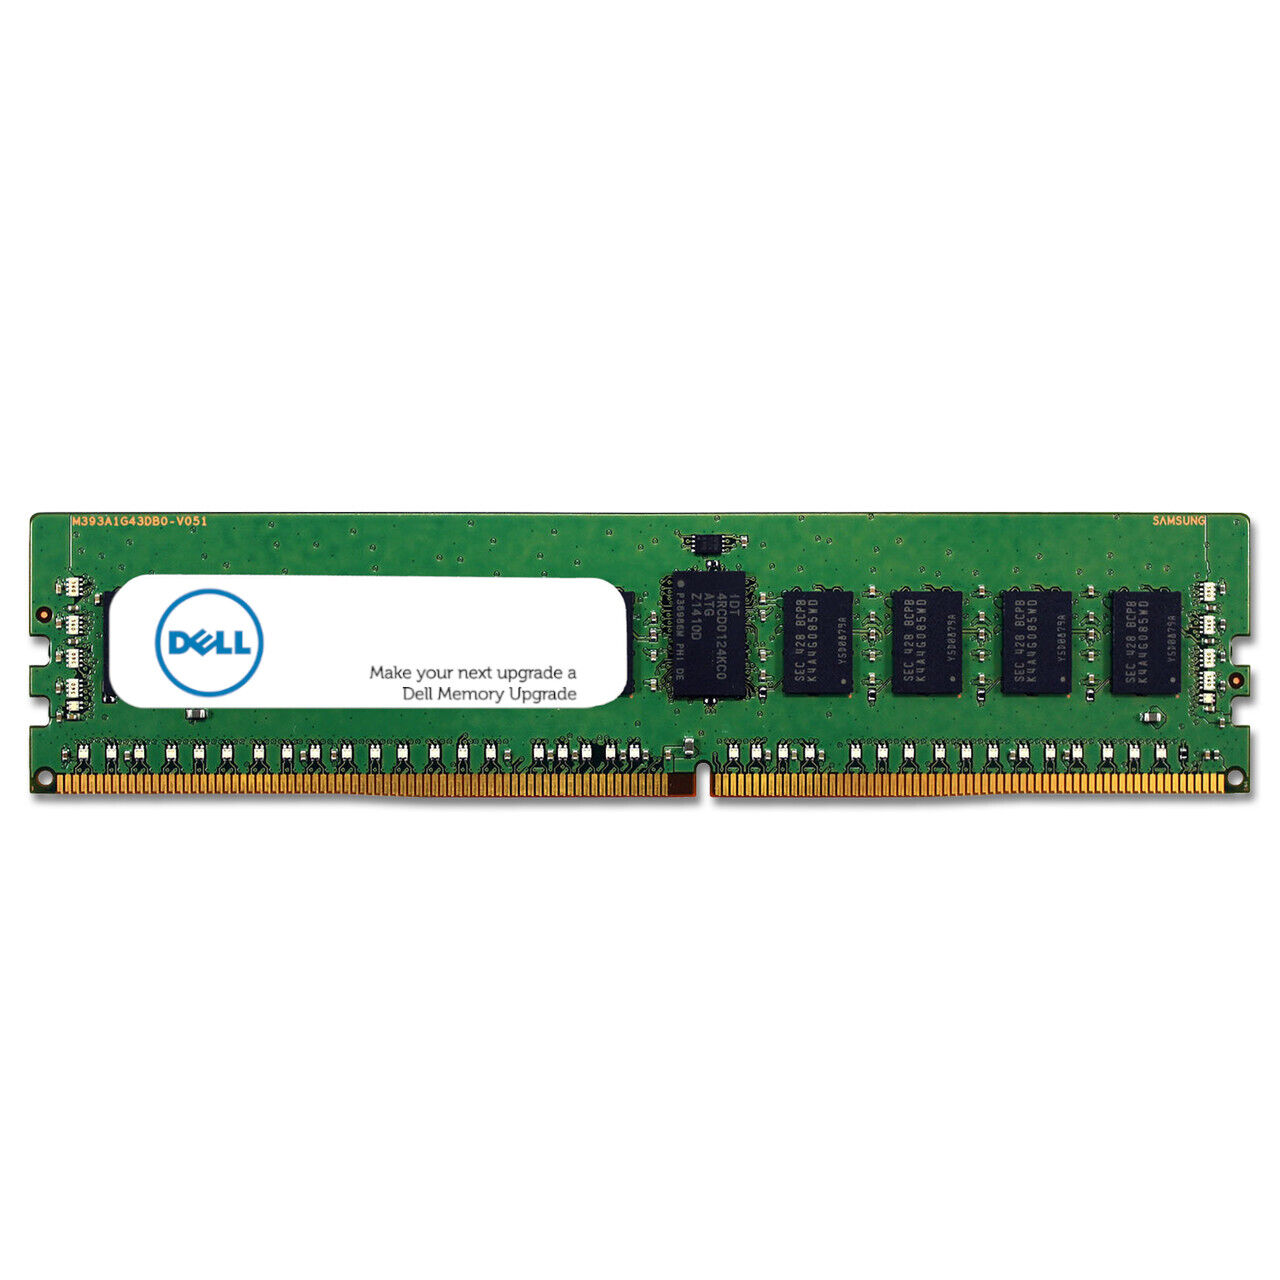 Dell Memory SNPCPC7GC/32G A8711888 32GB 2Rx8 DDR4 RDIMM 2400MHz RAM